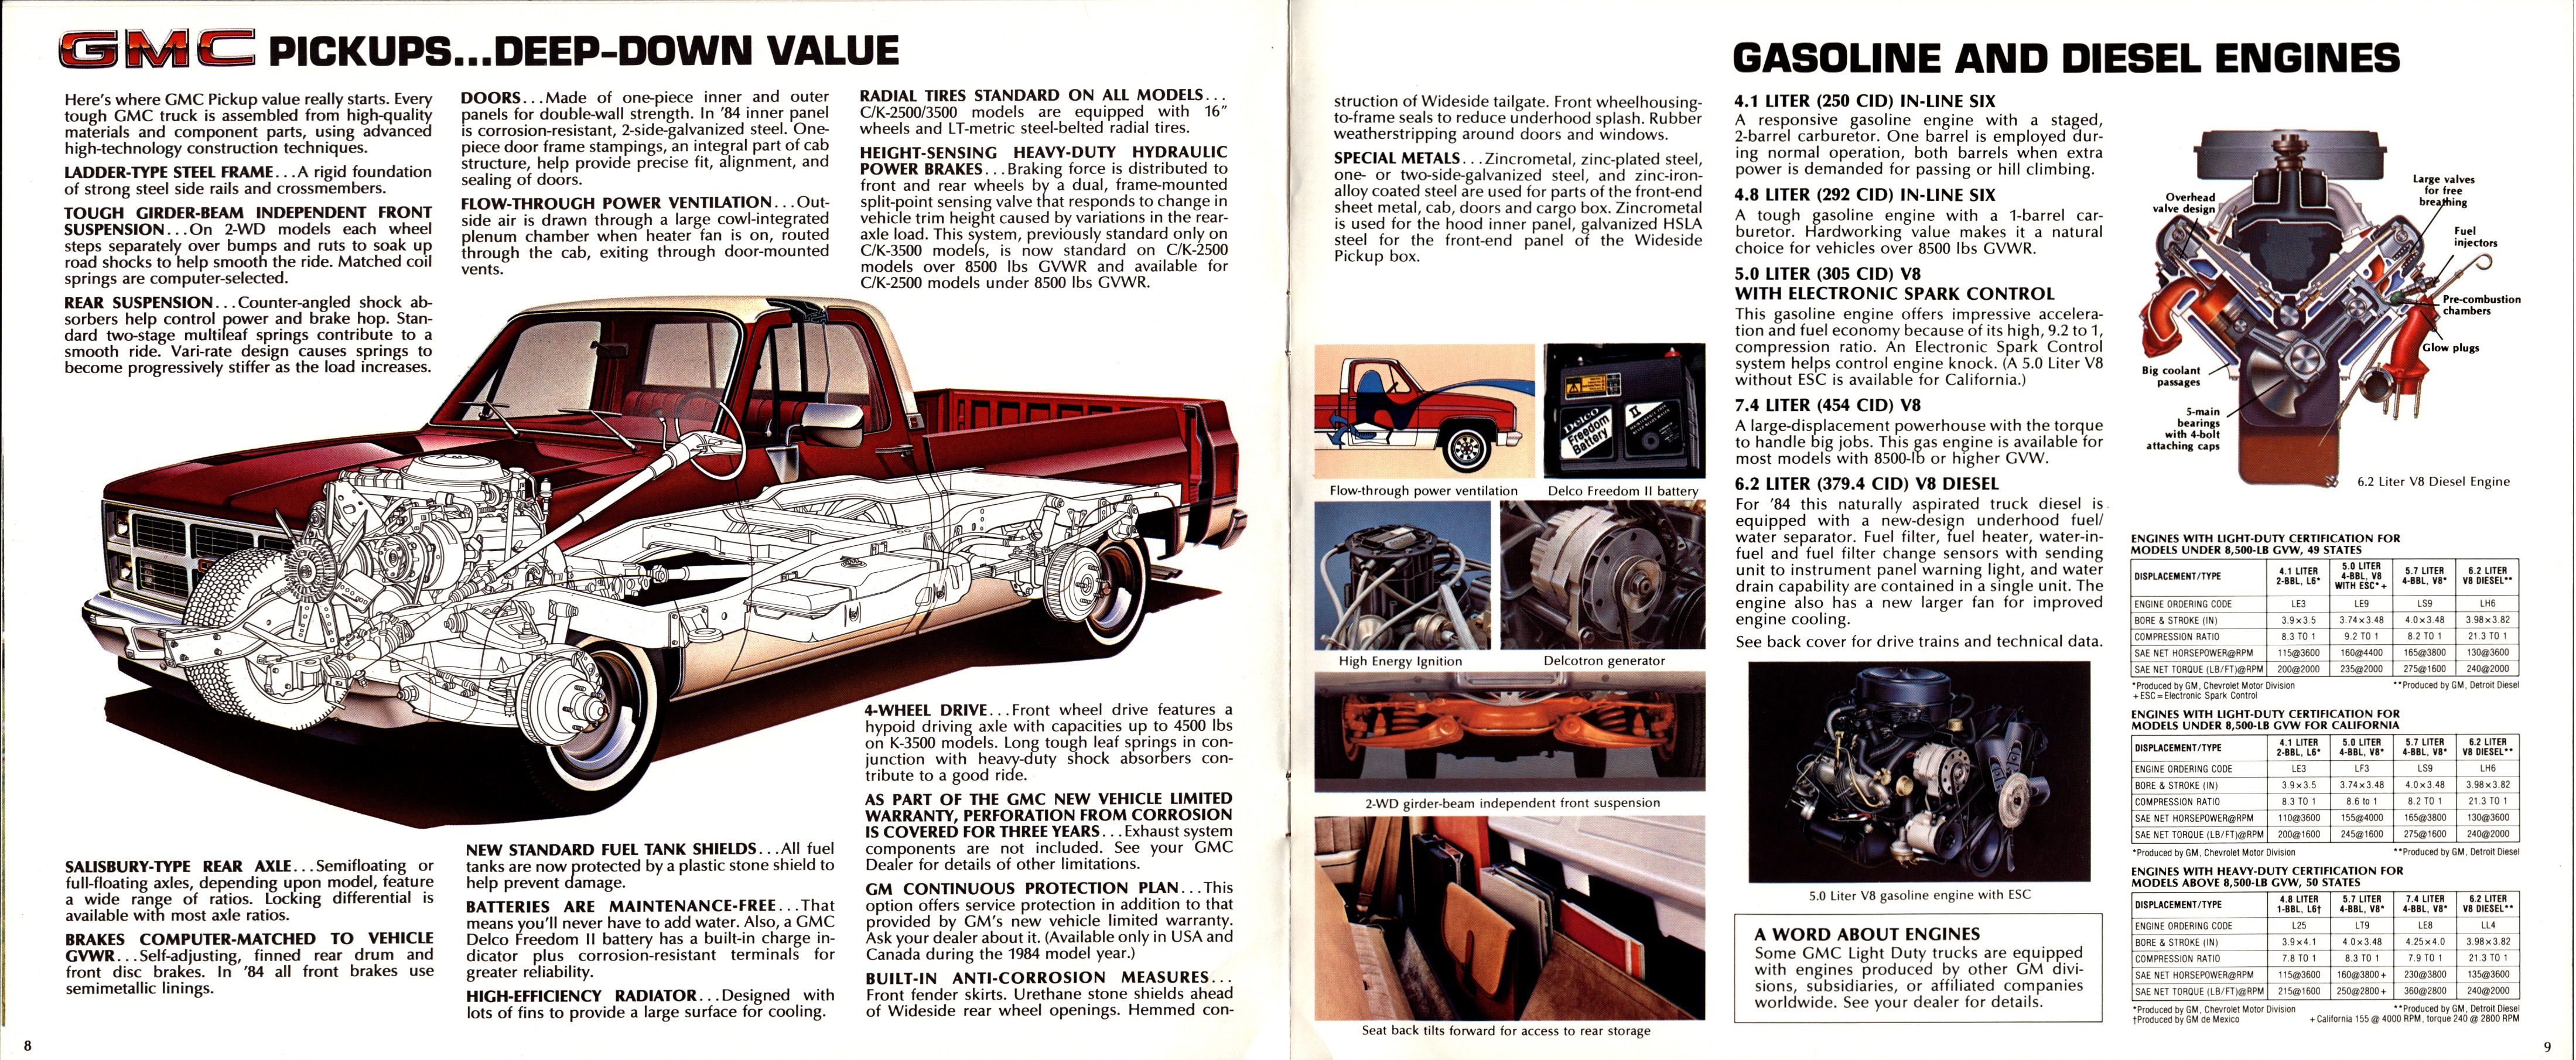 1984 GMC Pickups Brochure 08-09